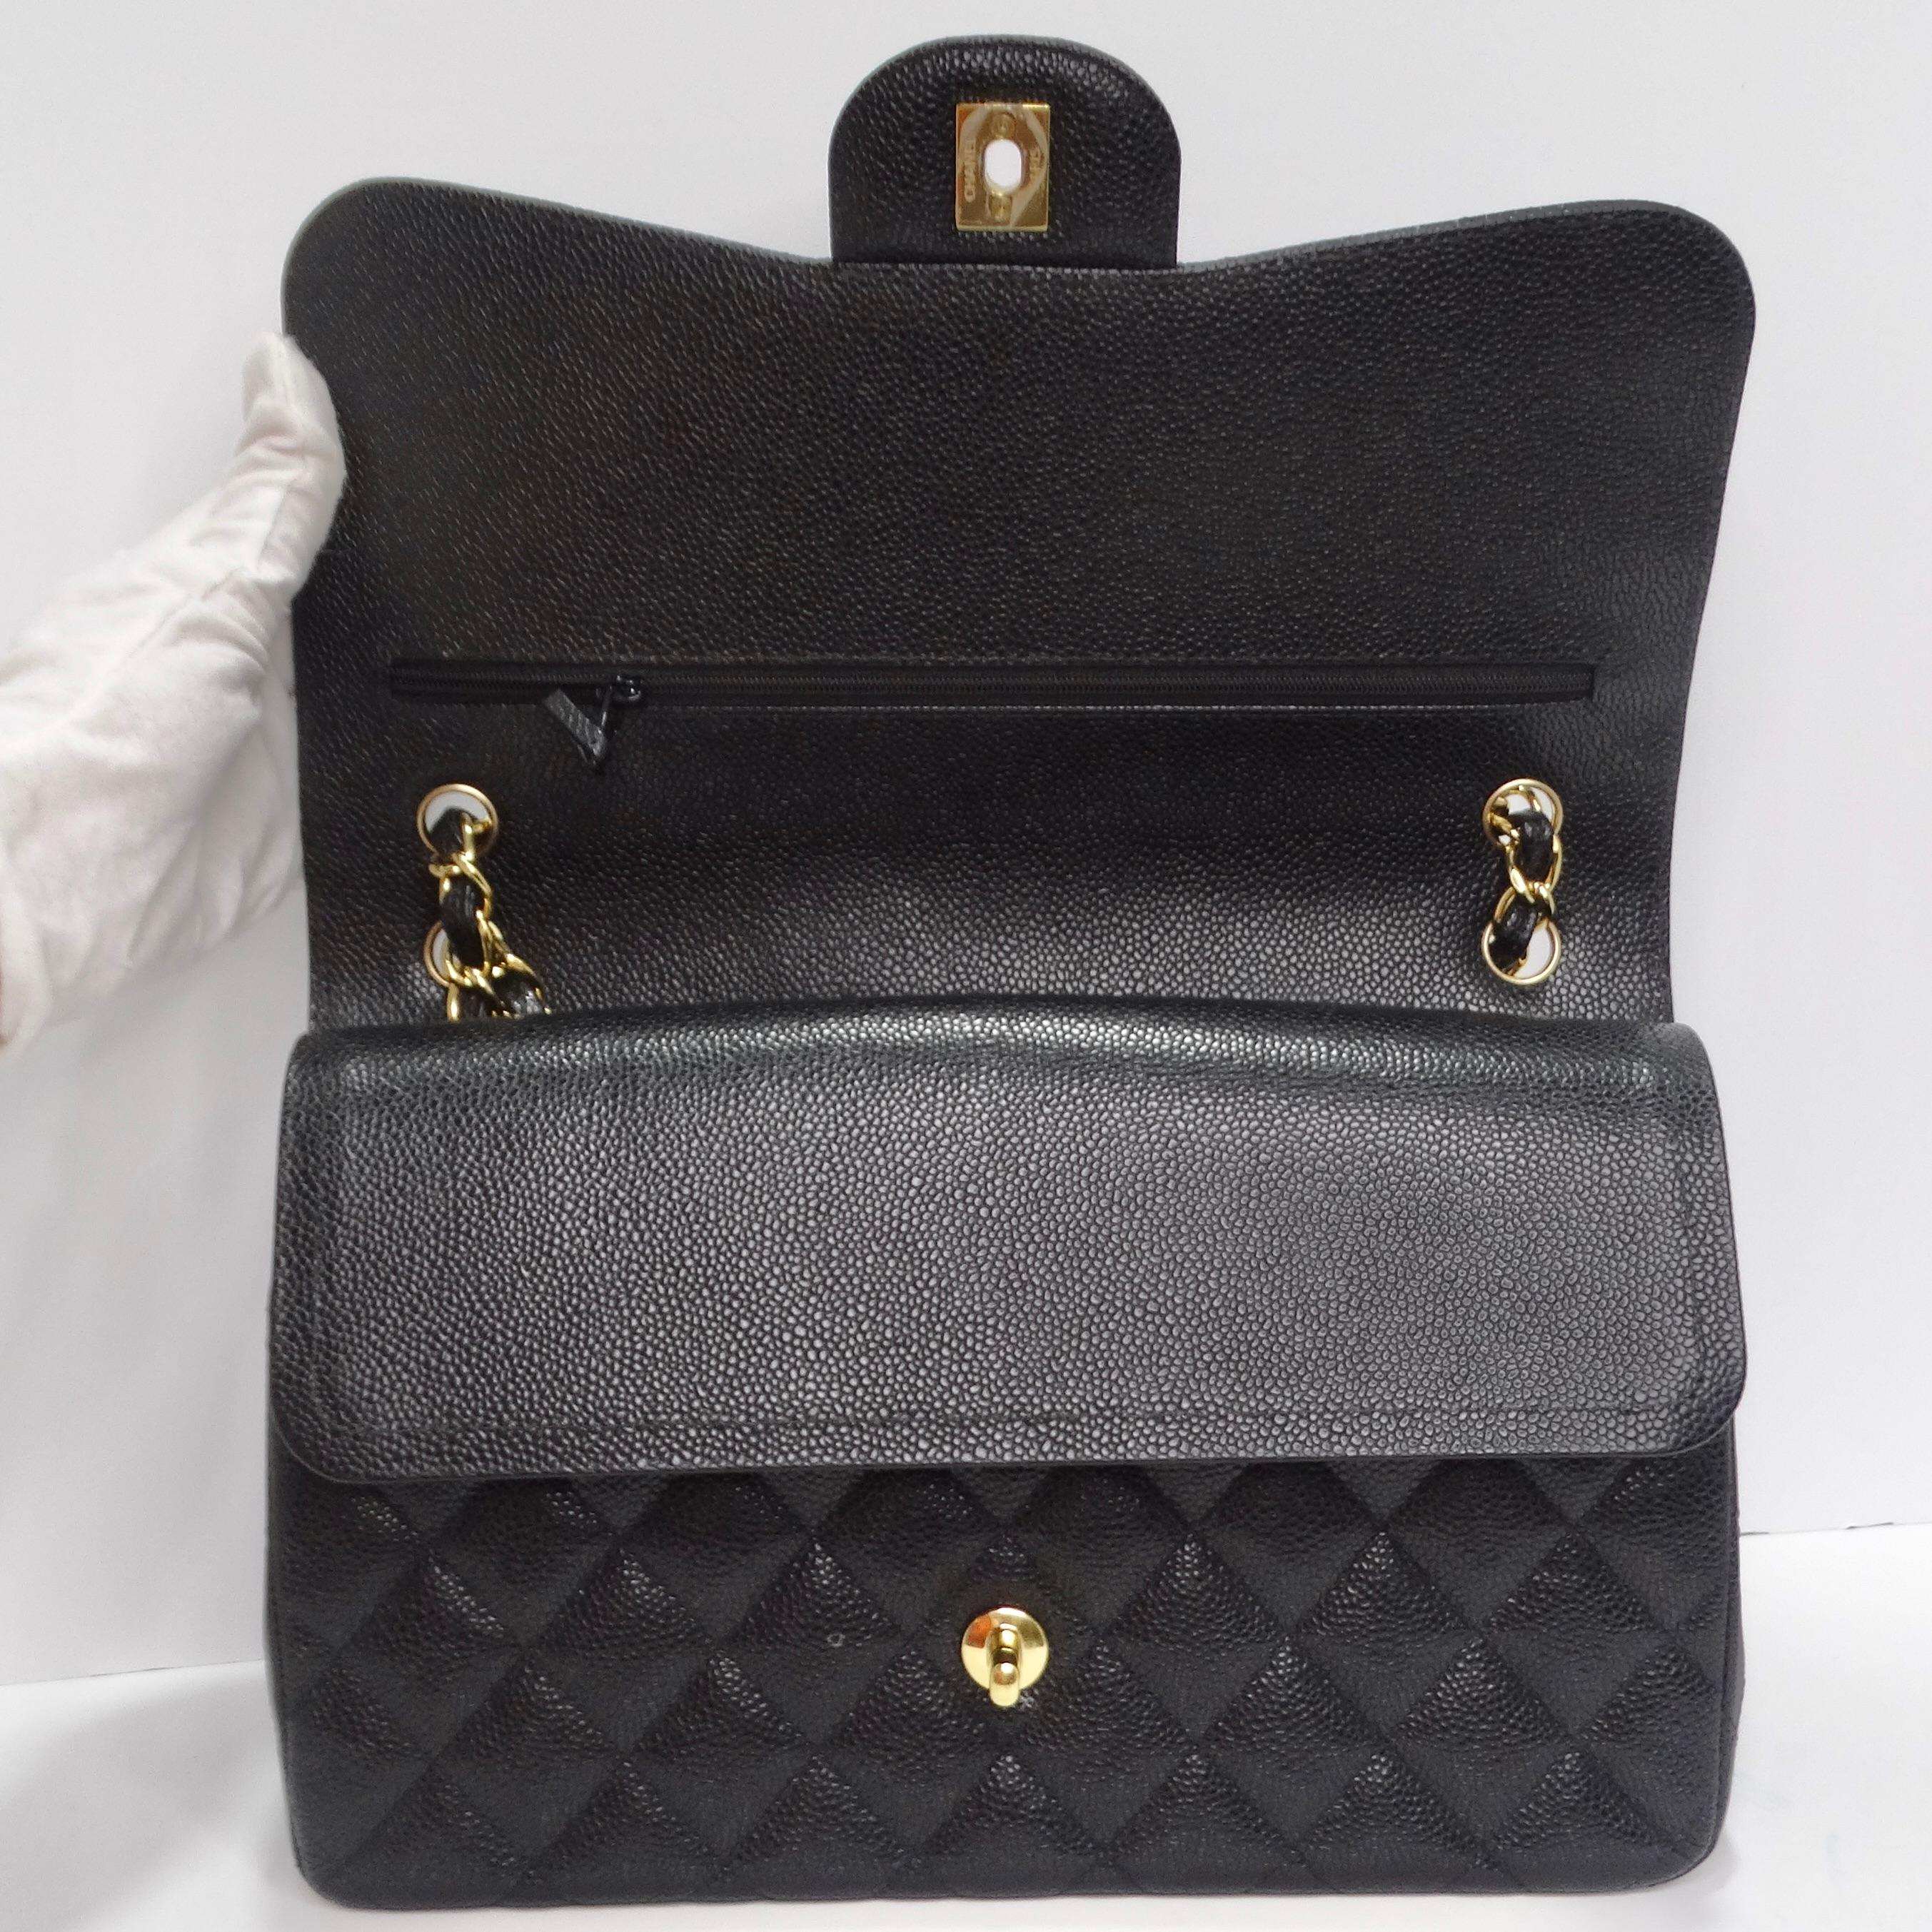 Chanel Large Classic Quilted Caviar Handbag Black/Burgundy 7